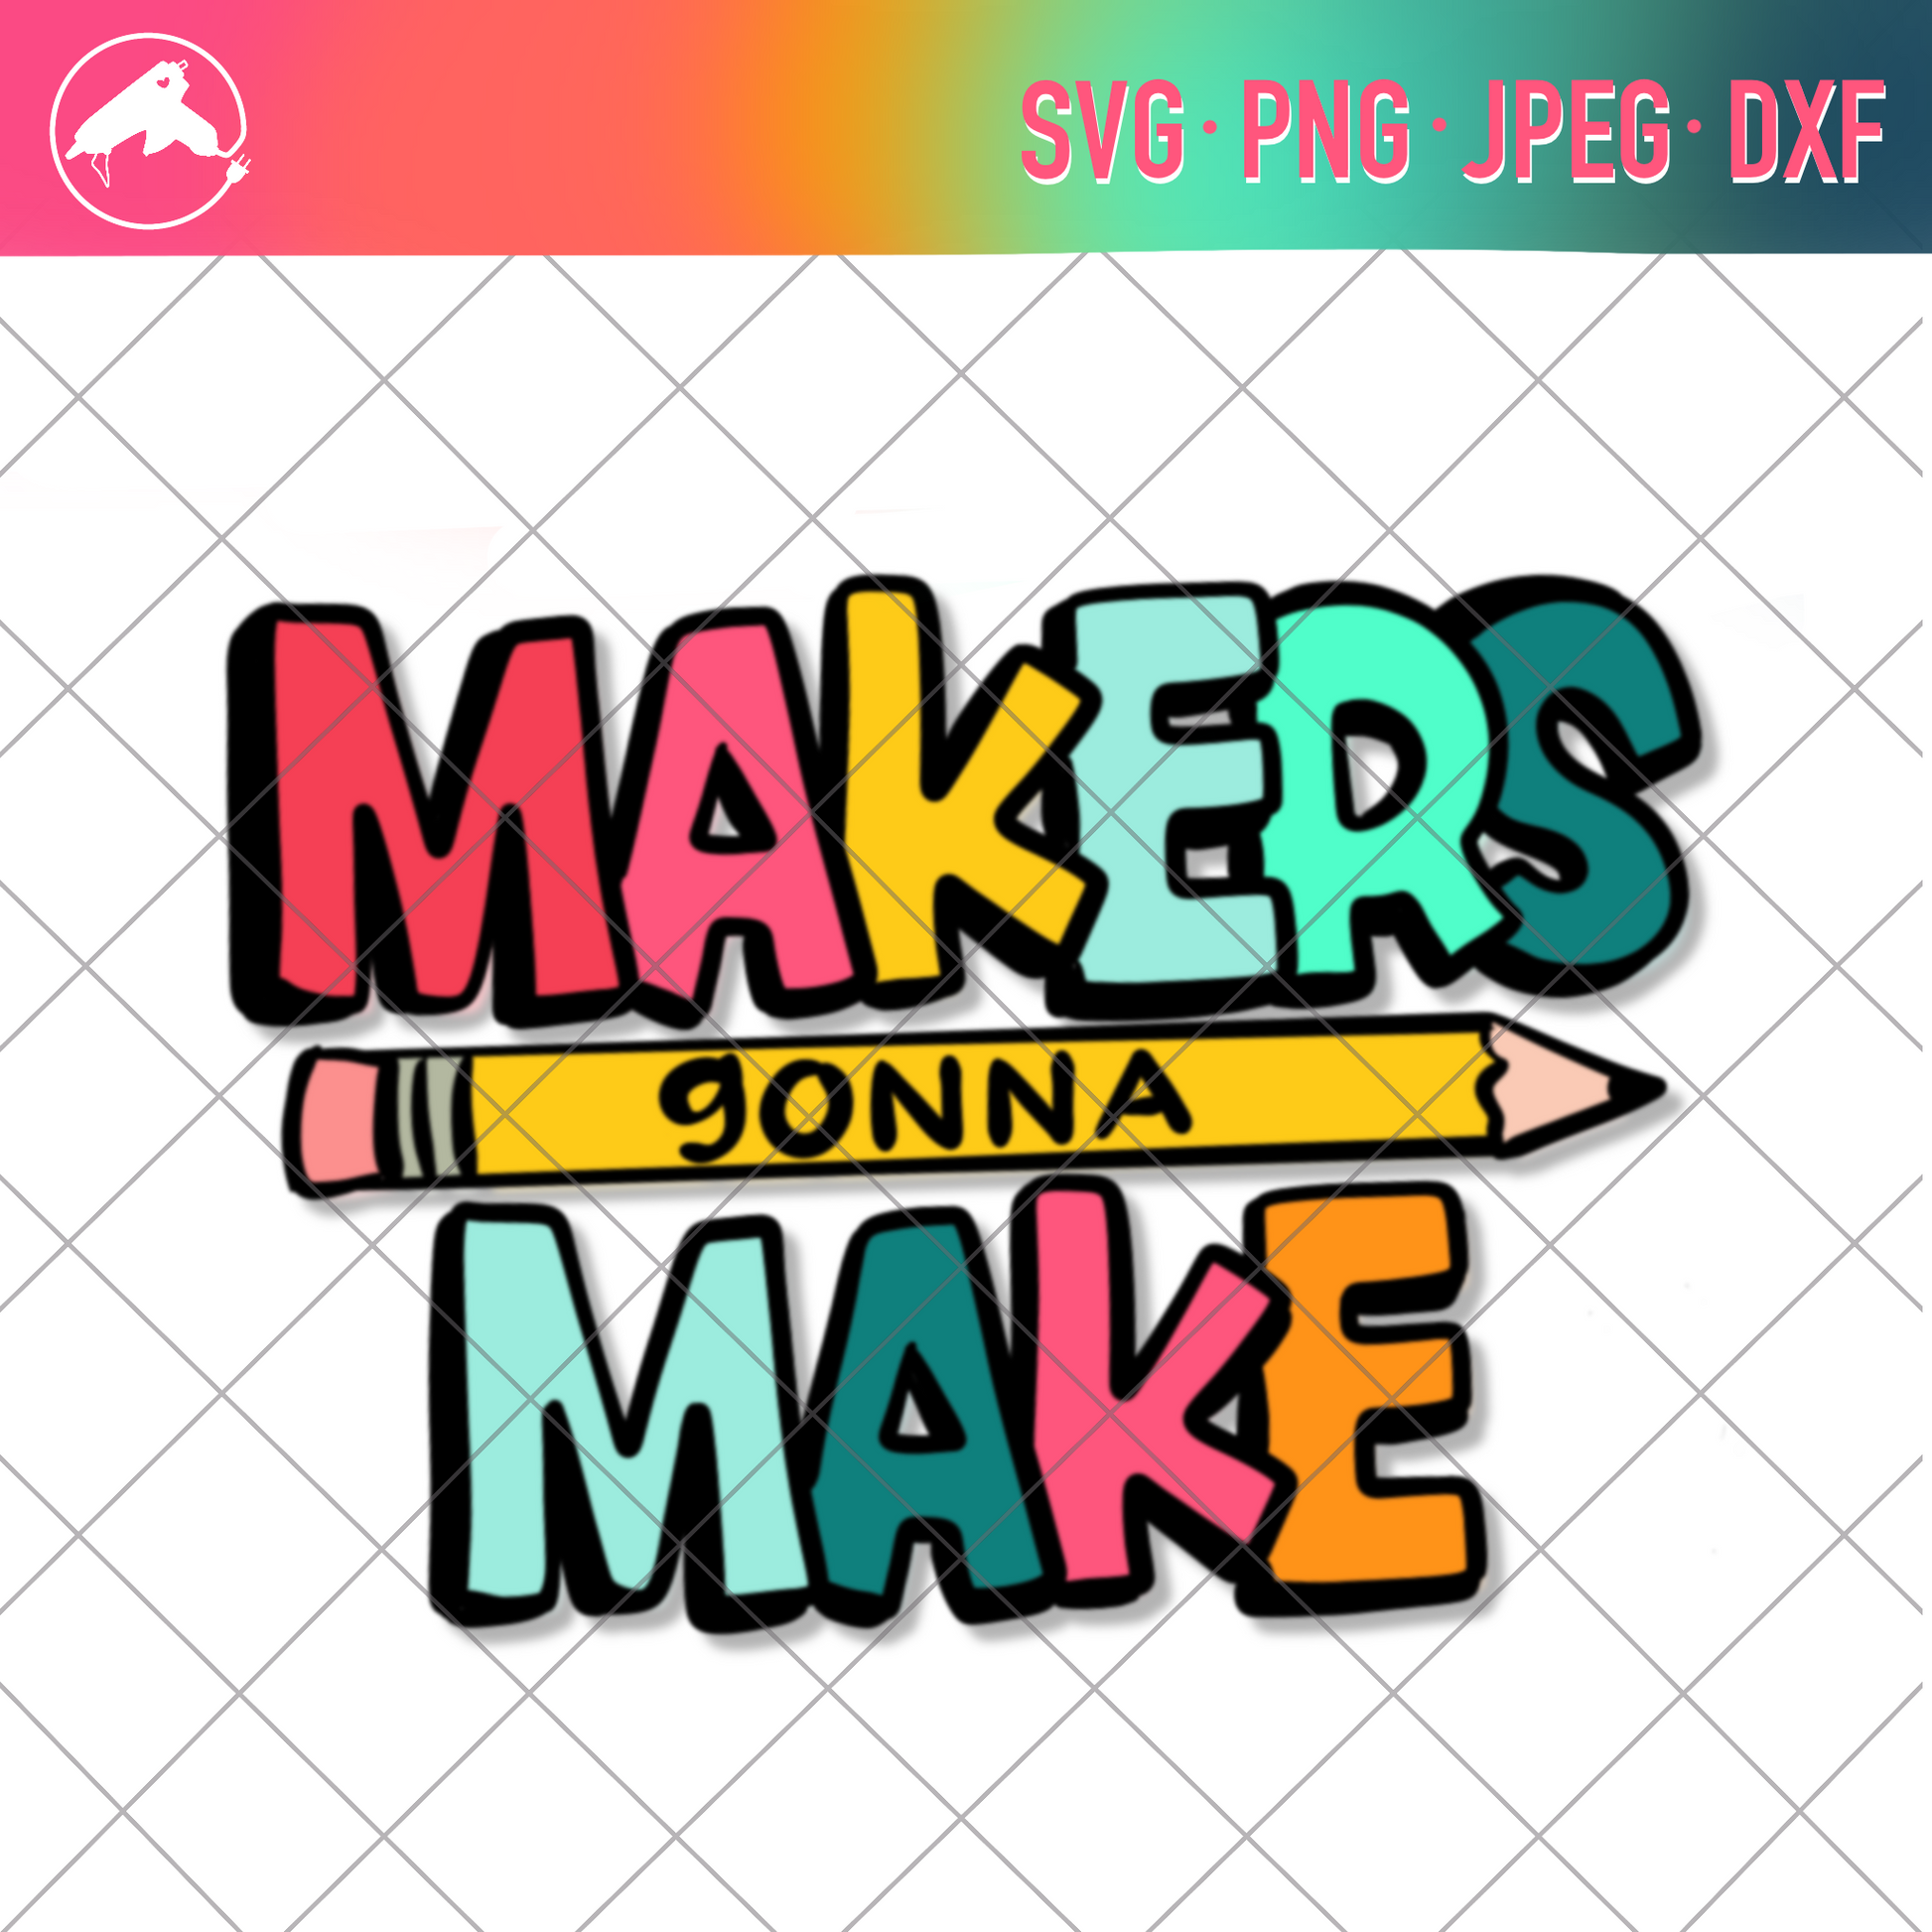 makers gonna make 